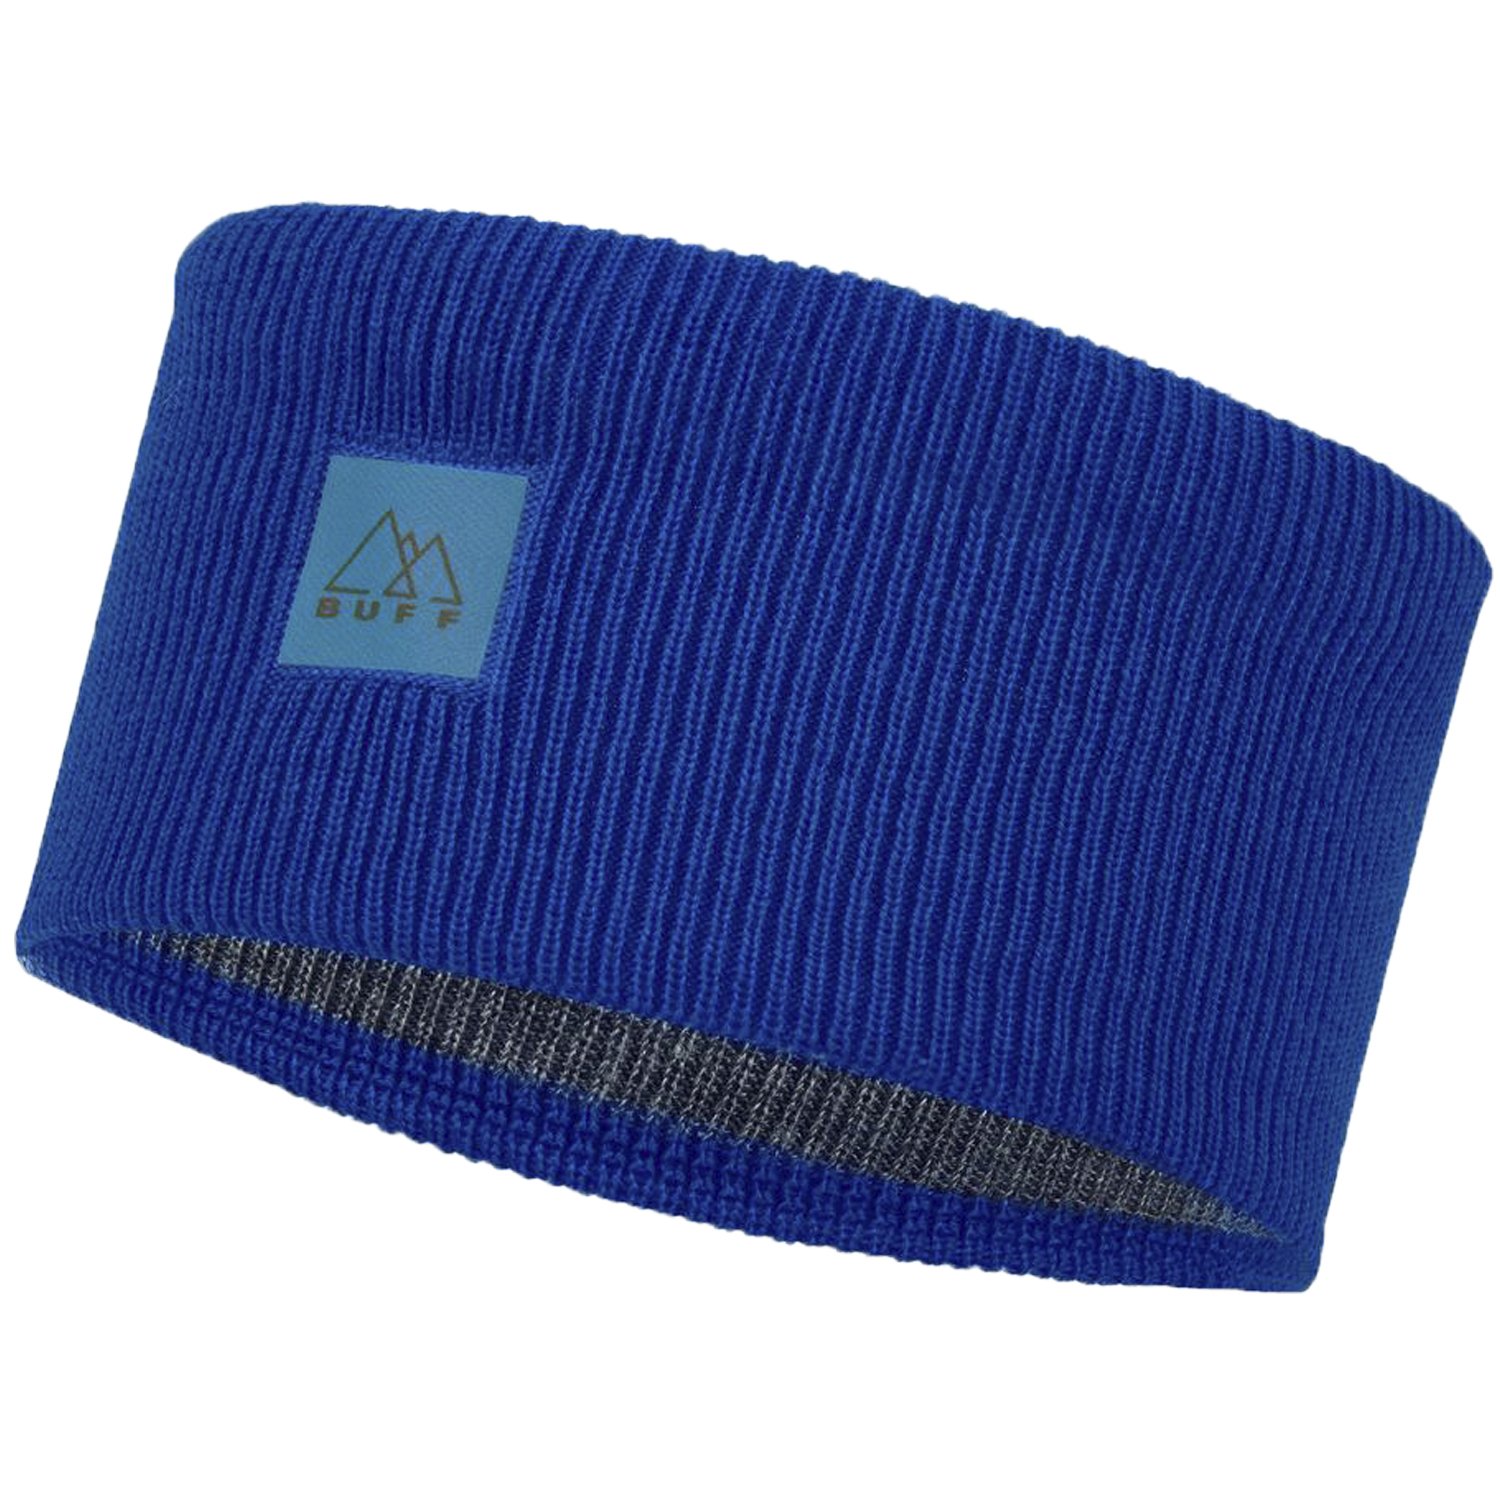 Повязка Buff Crossknit Headband Solid Azure Blue, 126484.720.10.00 повязка buff crossknit headband solid camouflage 126484 866 10 00